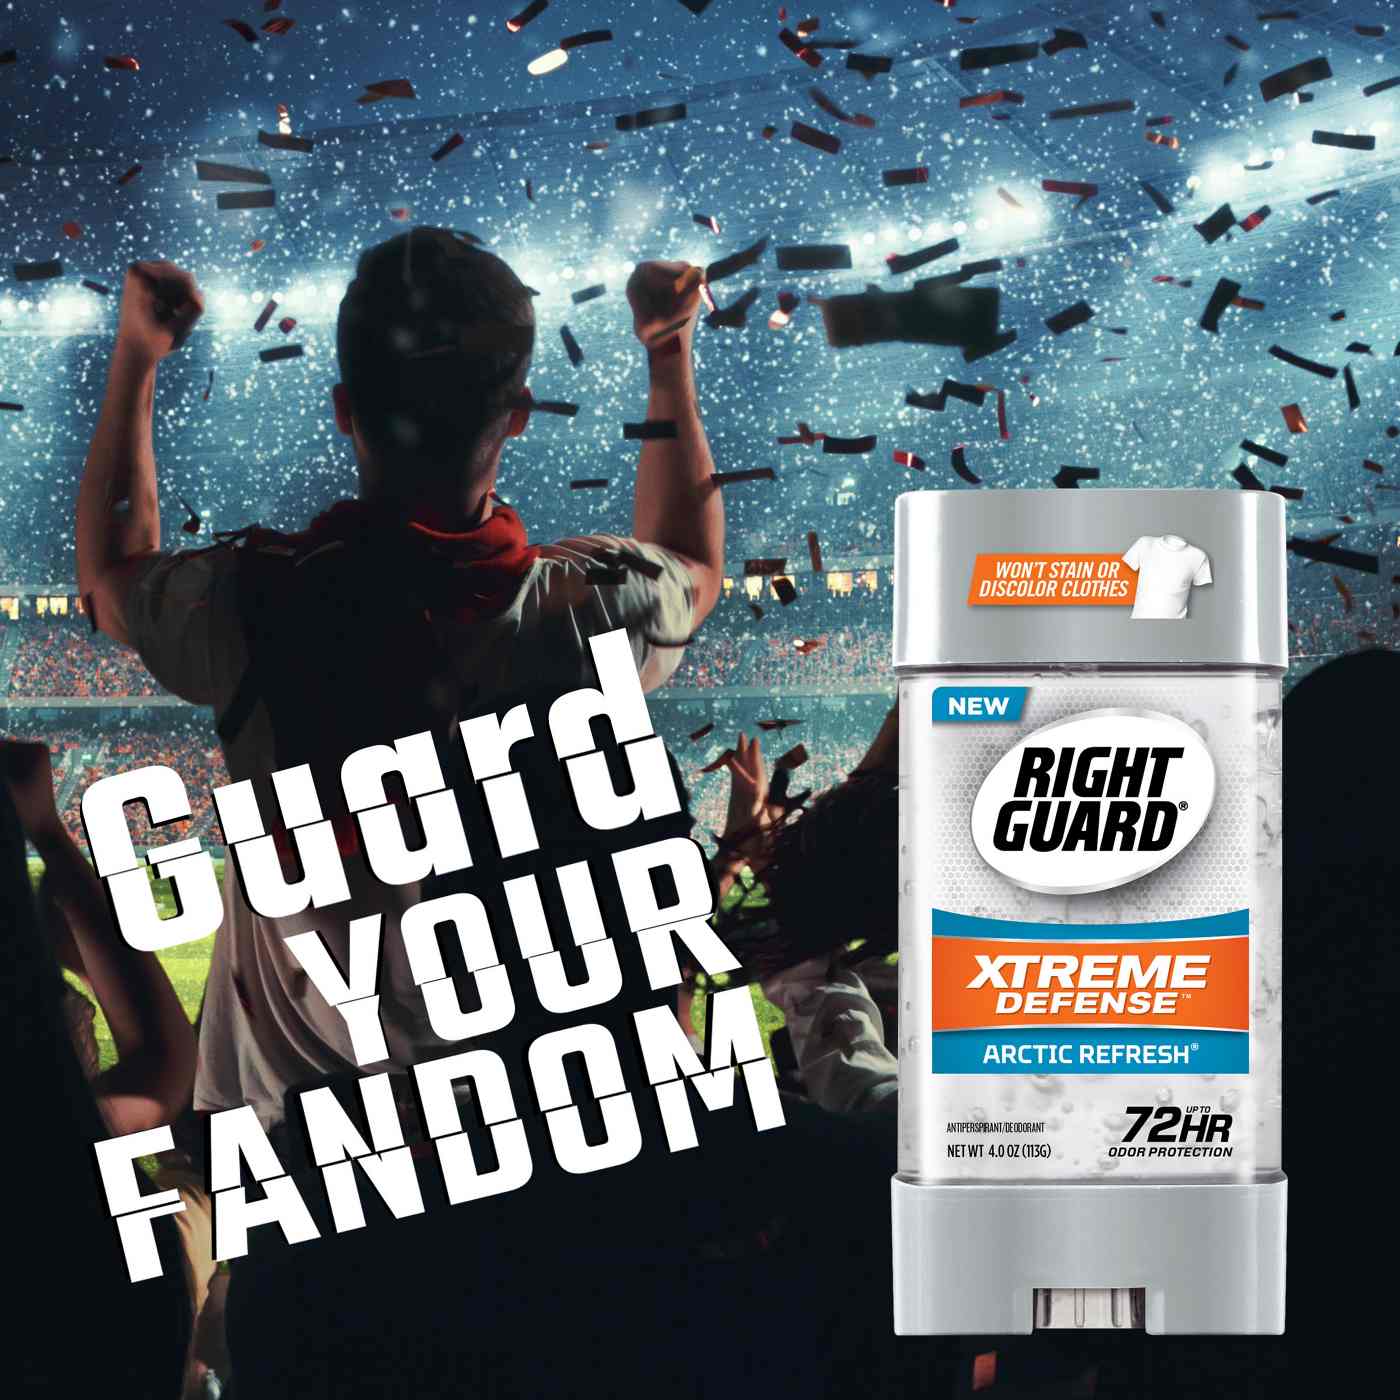 Right Guard Xtreme Defense Antiperspirant Deodorant Gel, Arctic Refresh; image 6 of 6